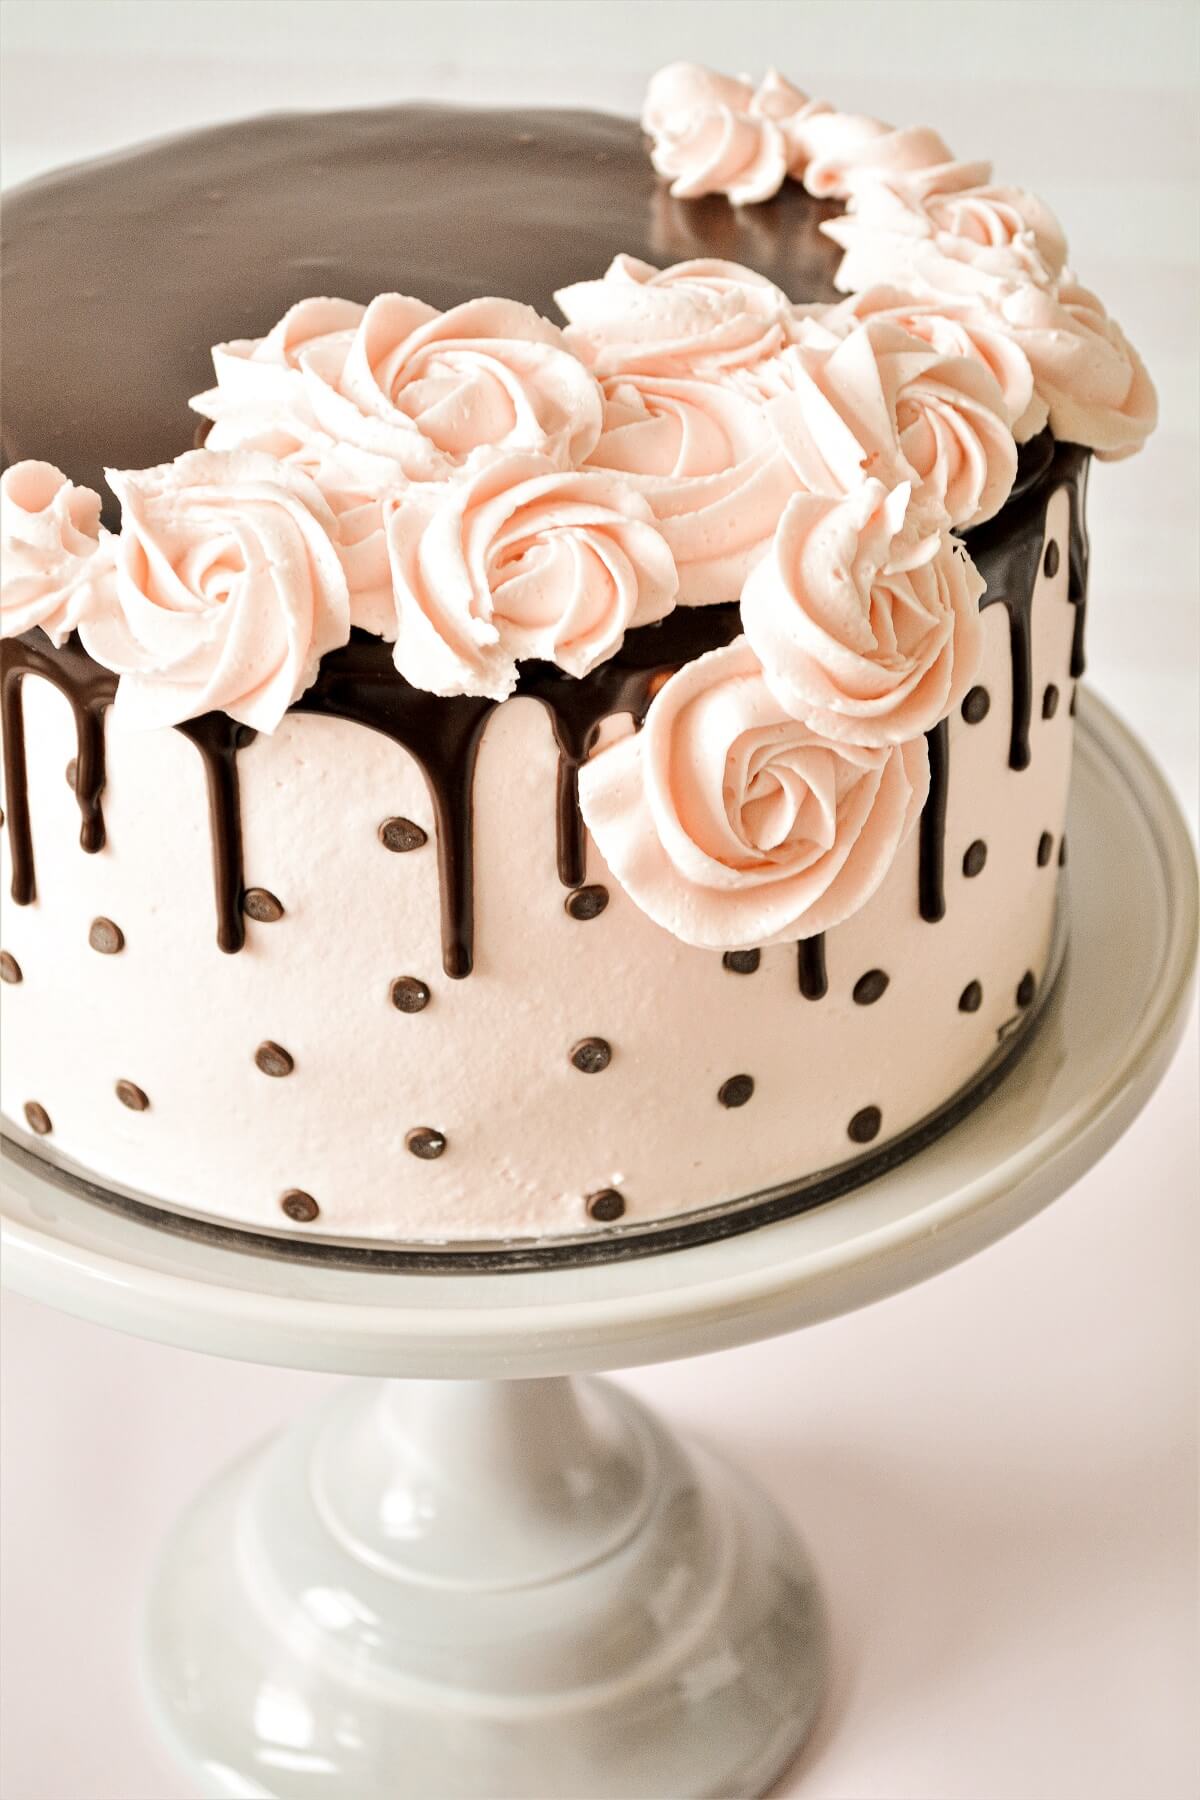 Buttercream roses on a polkadot drip cake.